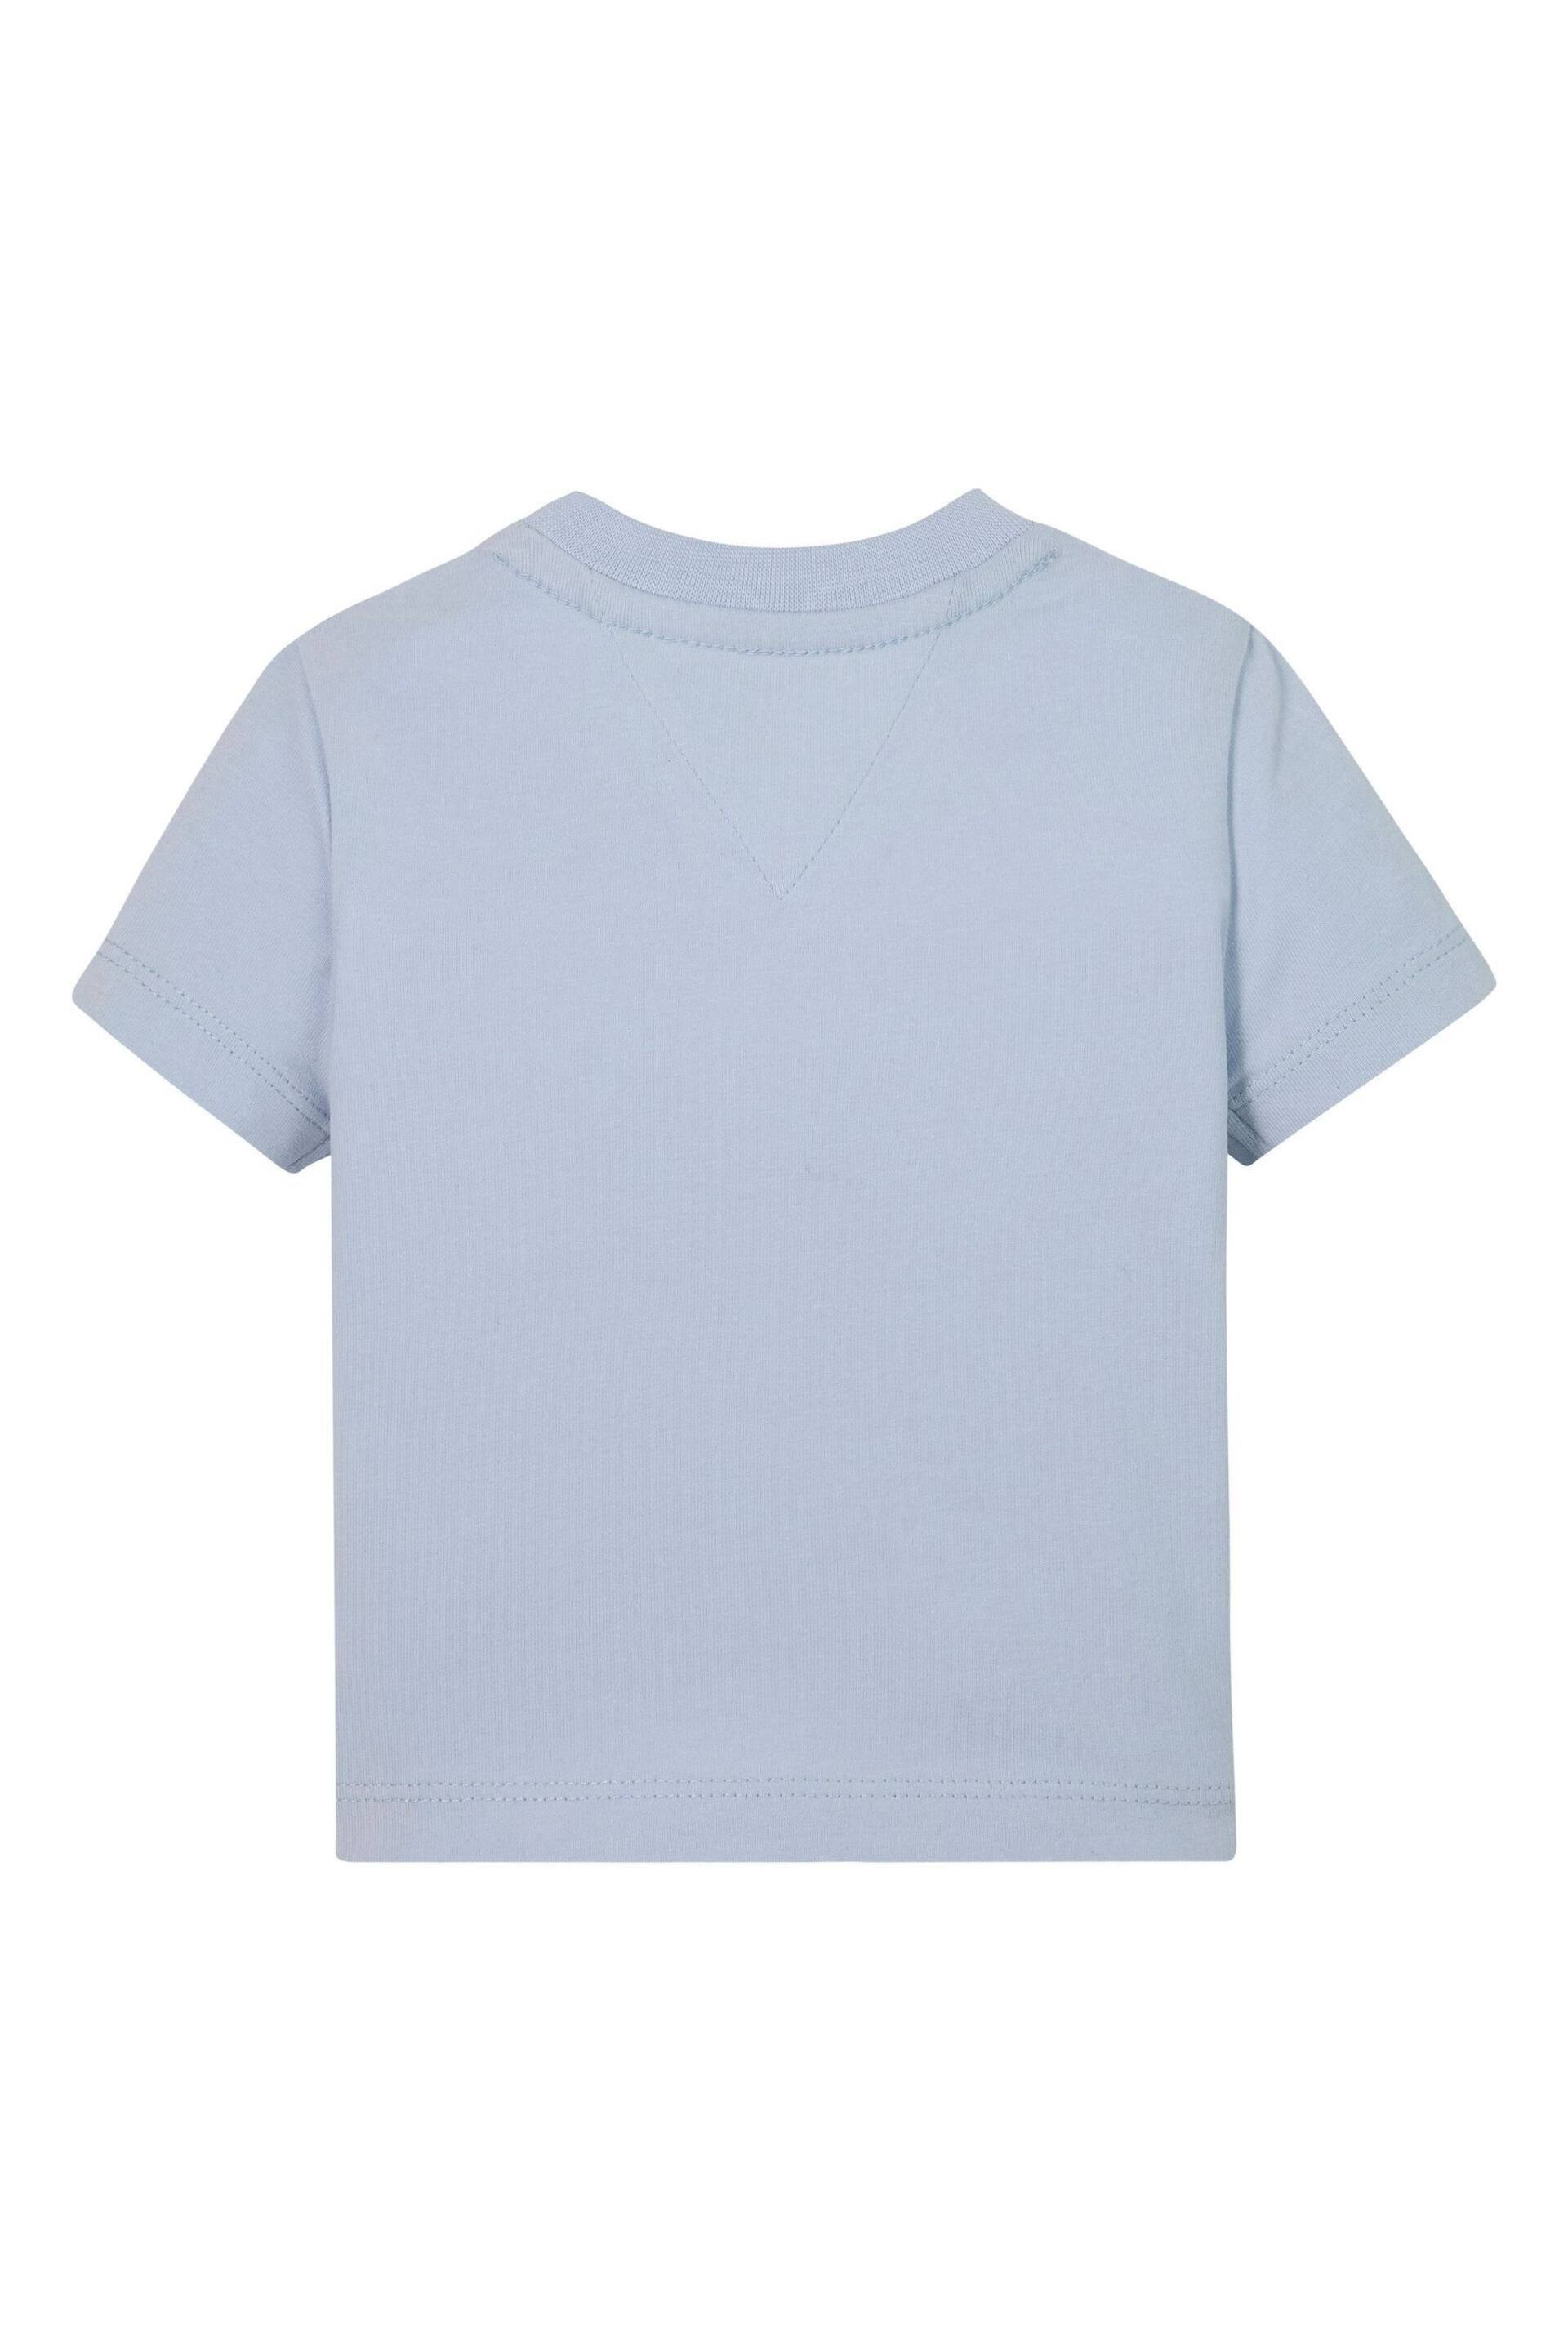 Tommy Hilfiger Baby Blue Gingham Flag T-Shirt - Image 2 of 3